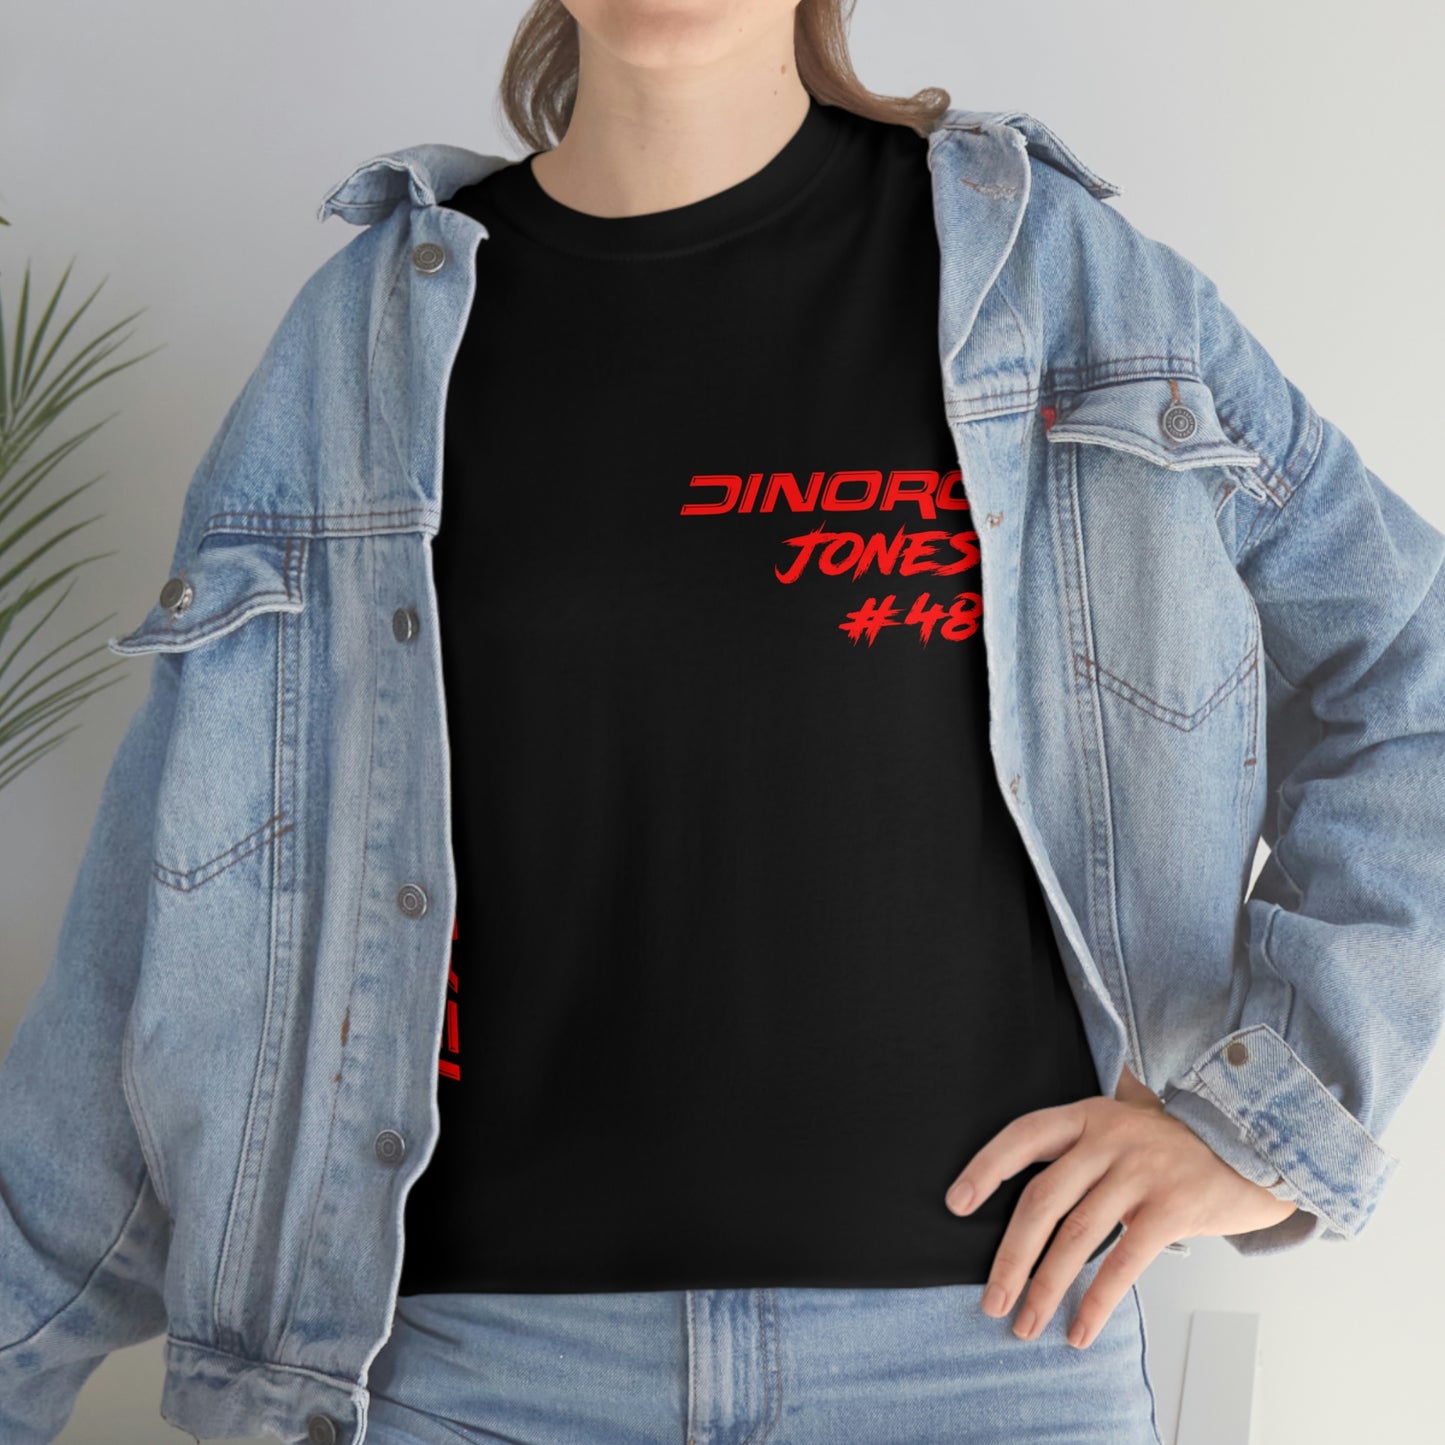 Team Driver Doug Jones Front and Back DinoRc Logo T-Shirt S-5x 5 colors